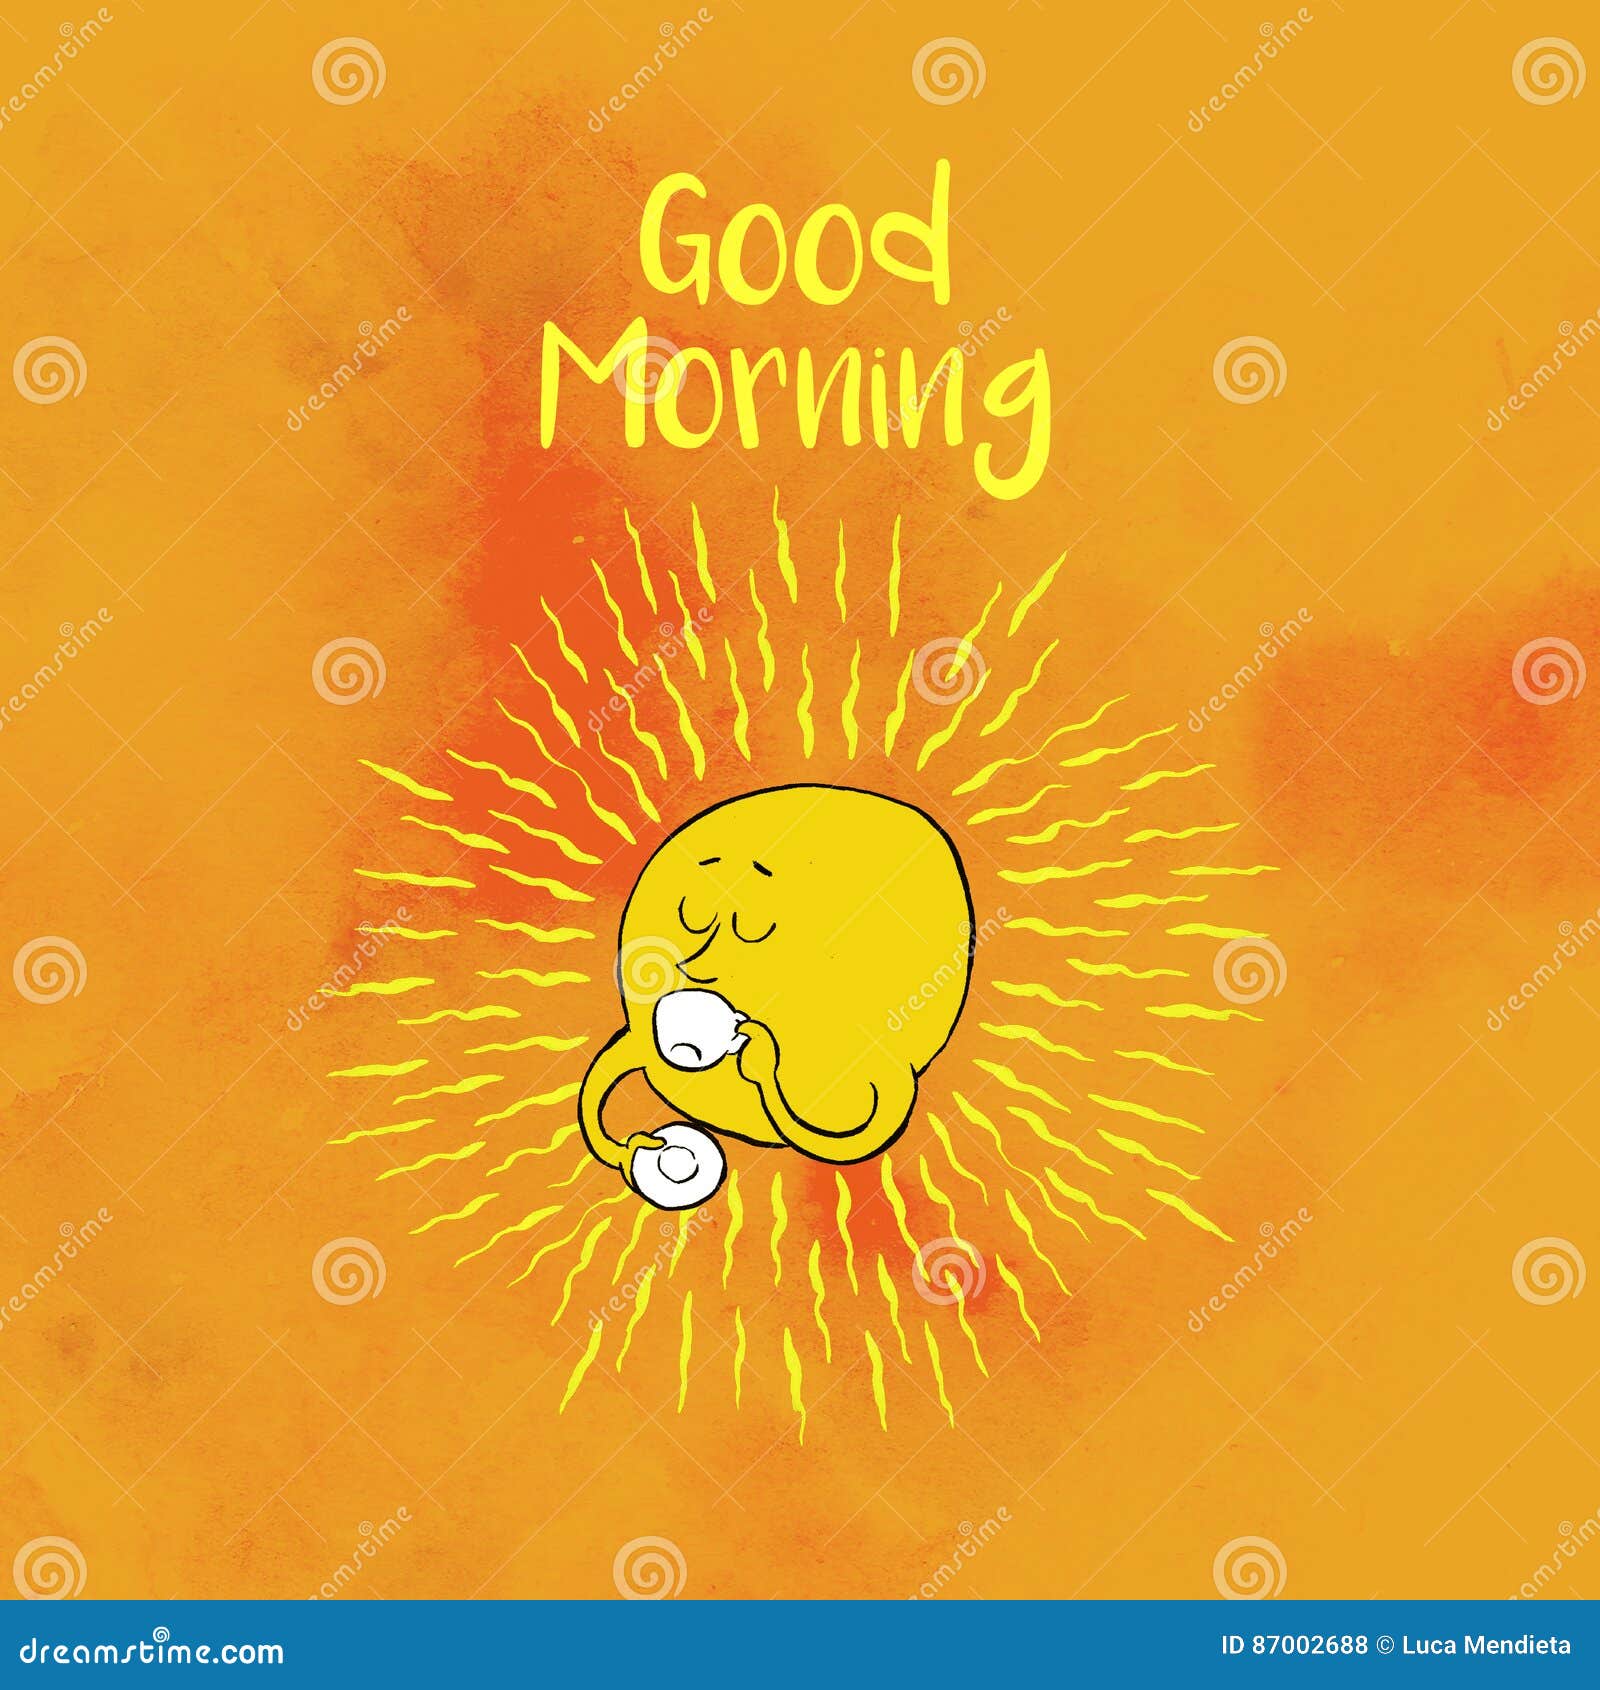 motivational card with sun saying good morning